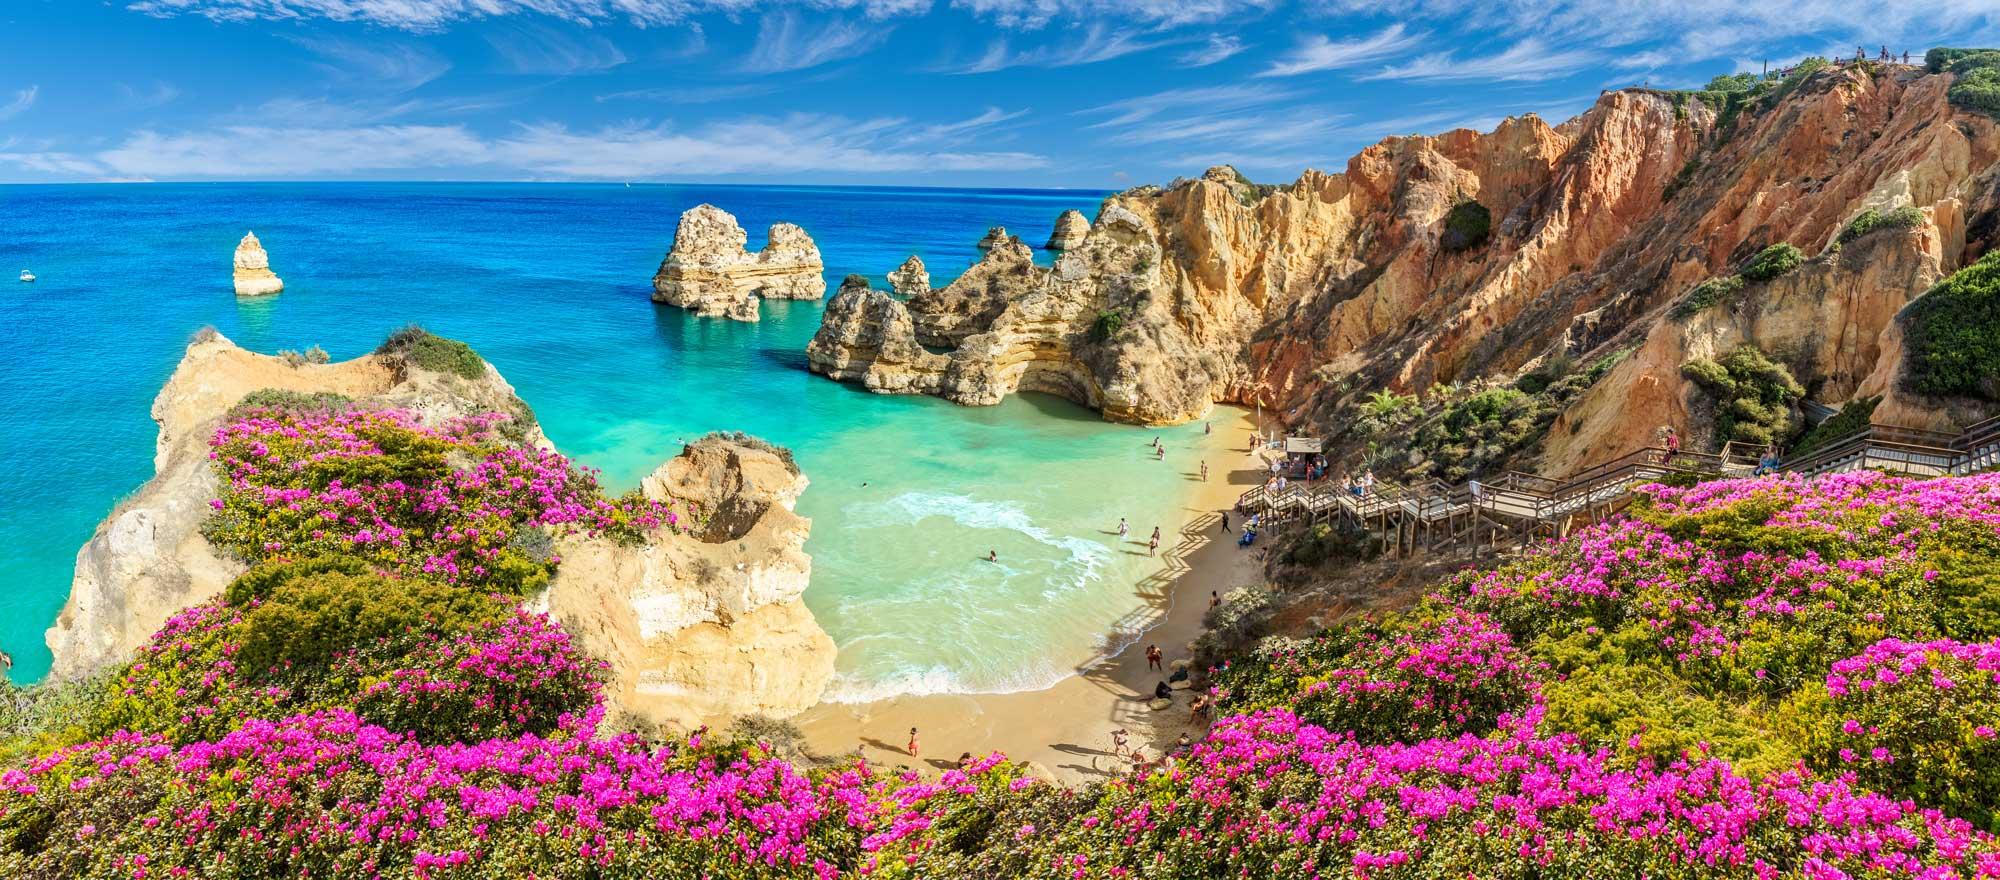 Landscape with Praia do Camilo, famous beach in Algarve, Portugal Photo: Adobe Stockk